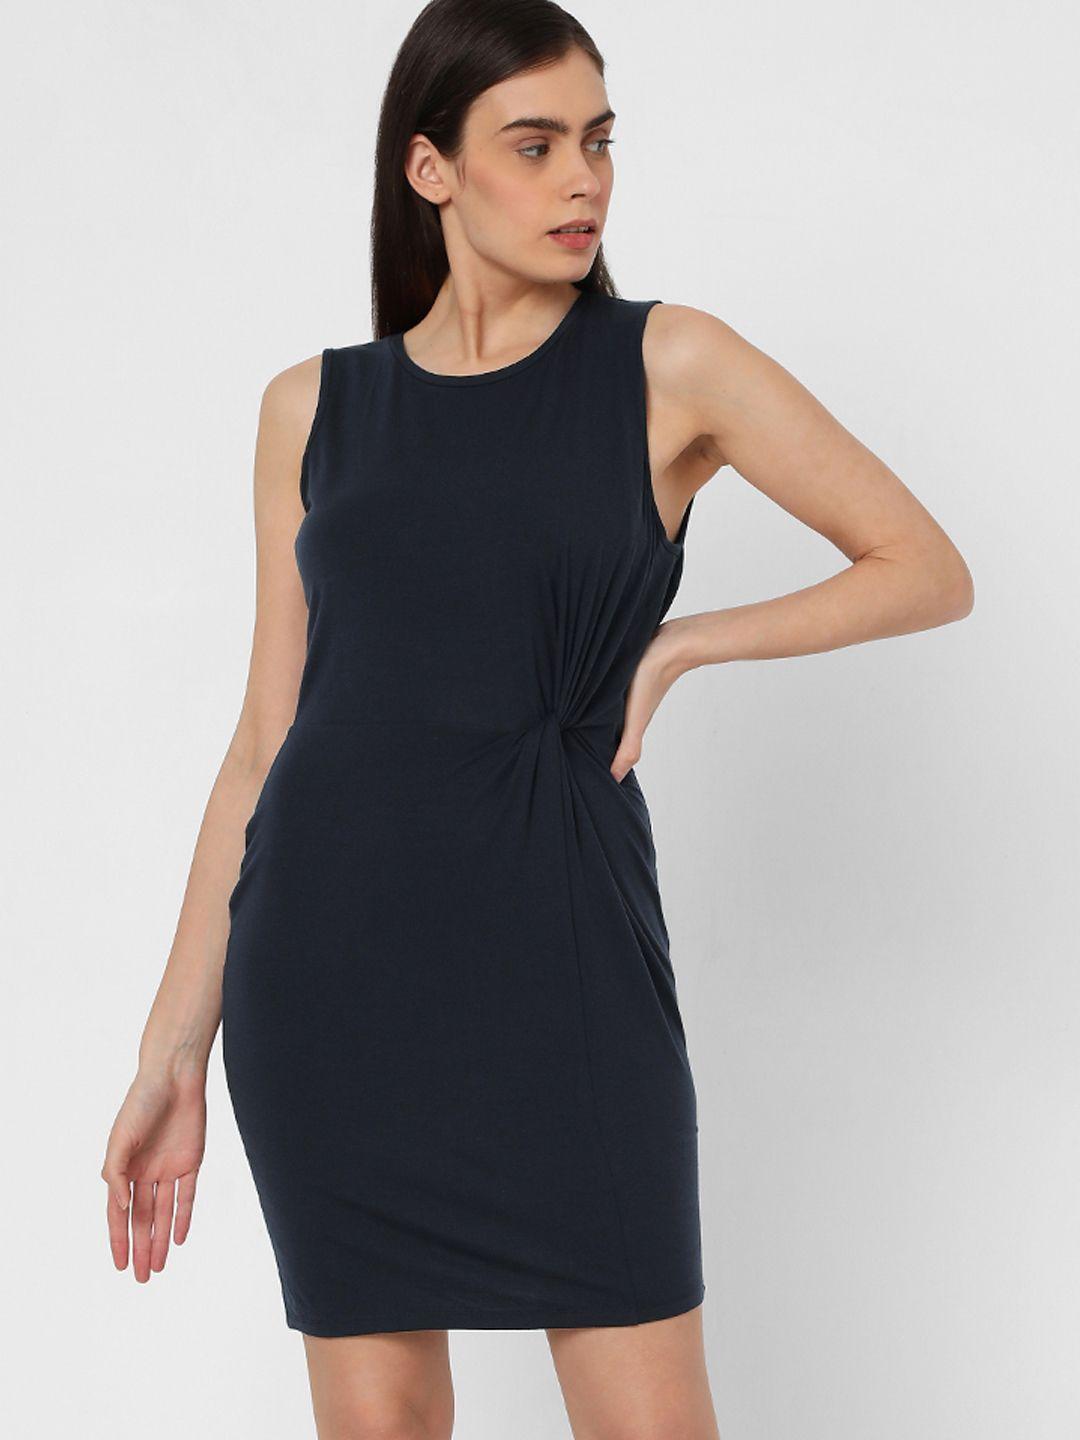 vero moda women navy blue solid sheath dress